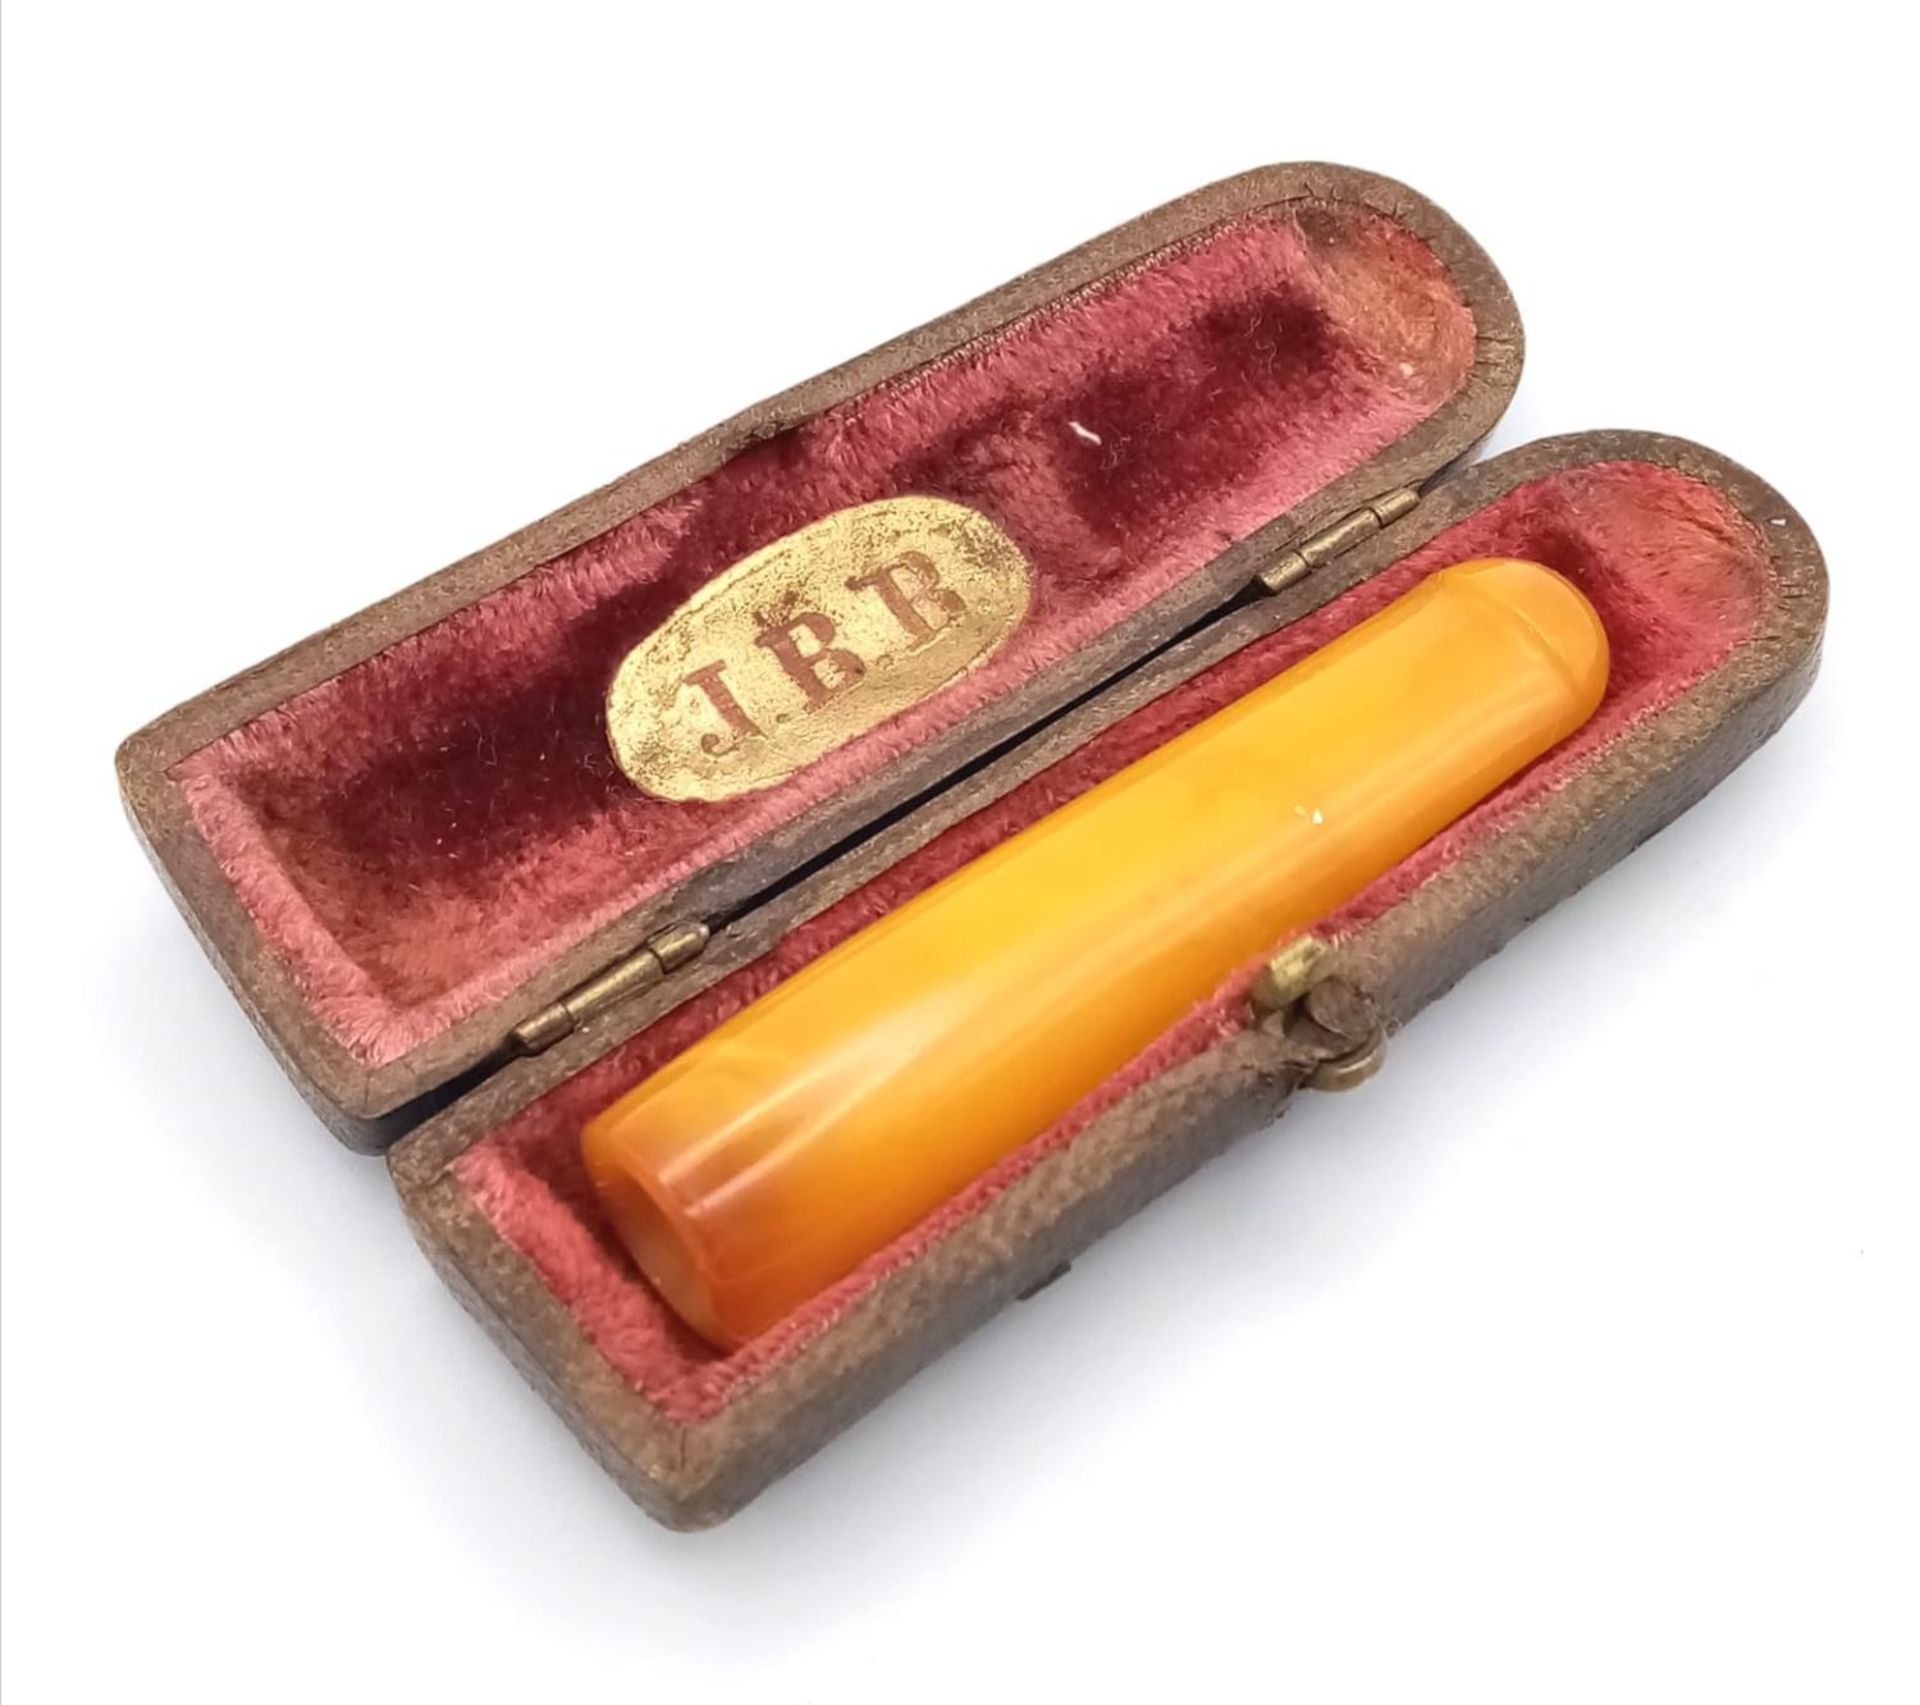 A Vintage Amber Cheroot Holder in Original Box - 8cm. - Image 5 of 5